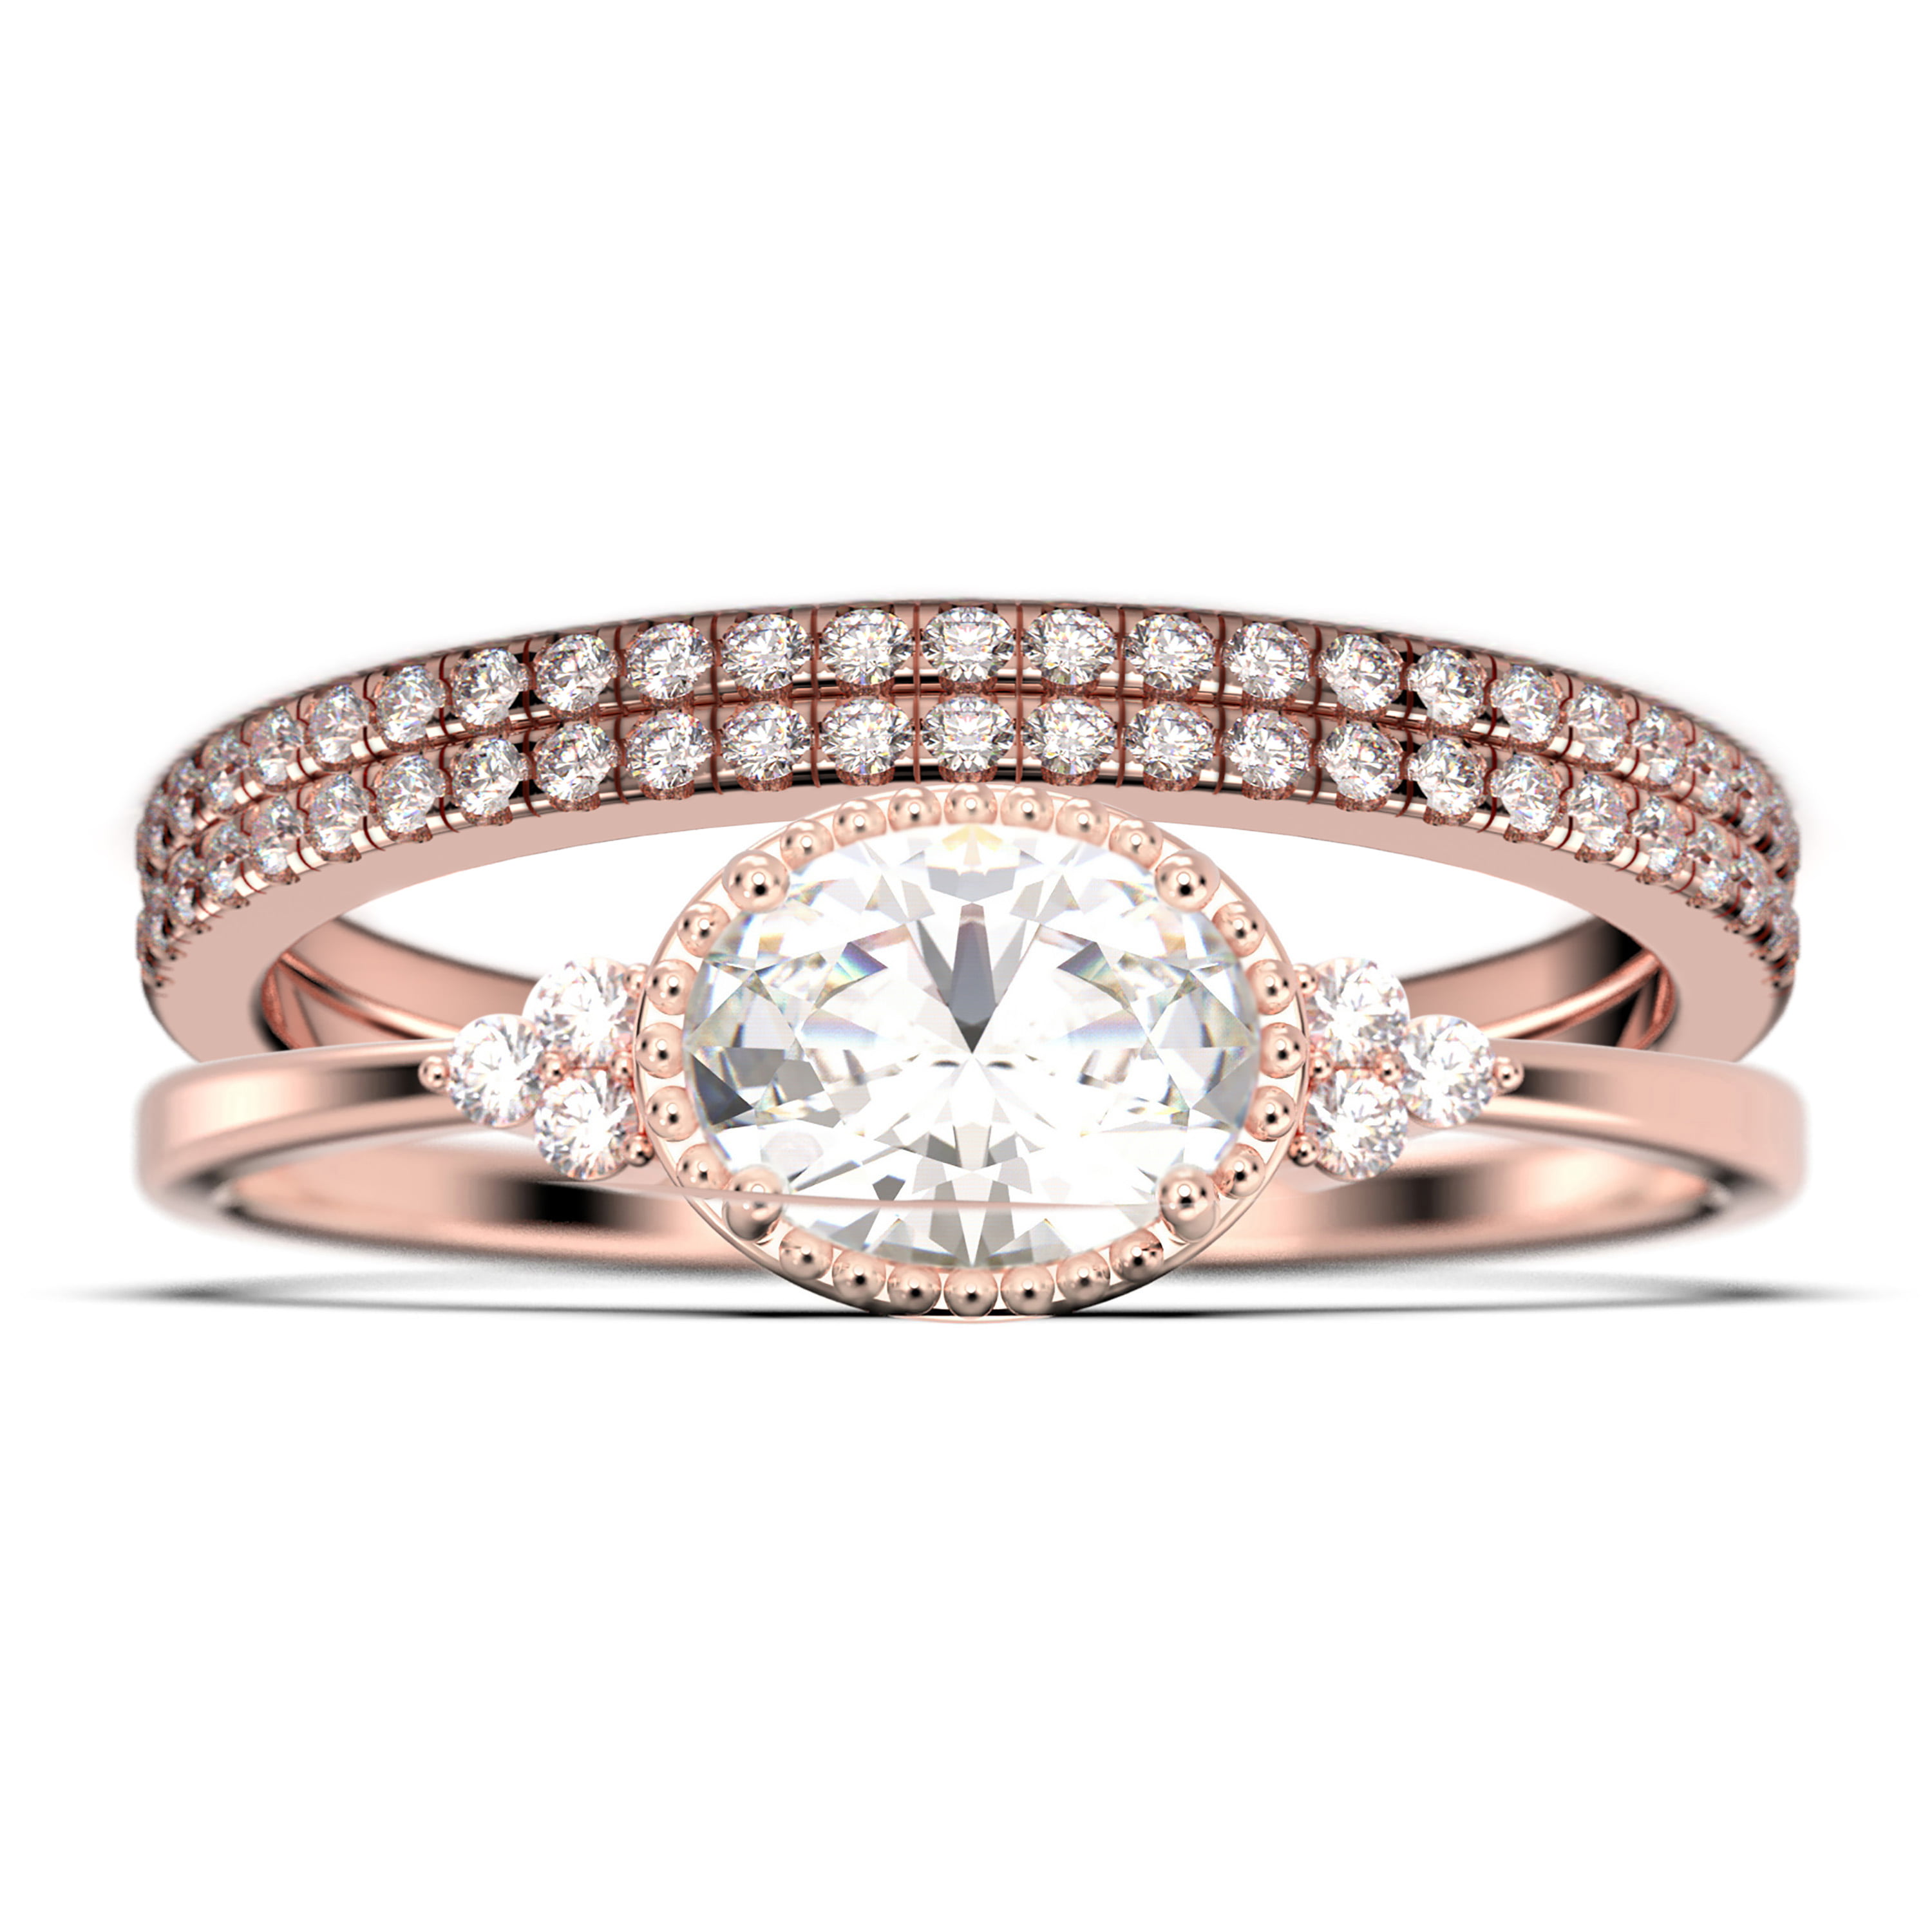 Details about   Vintage Art Deco Ring Engagement Bridal Ring 2Ct Diamond Bezel Set 14K Gold Over 